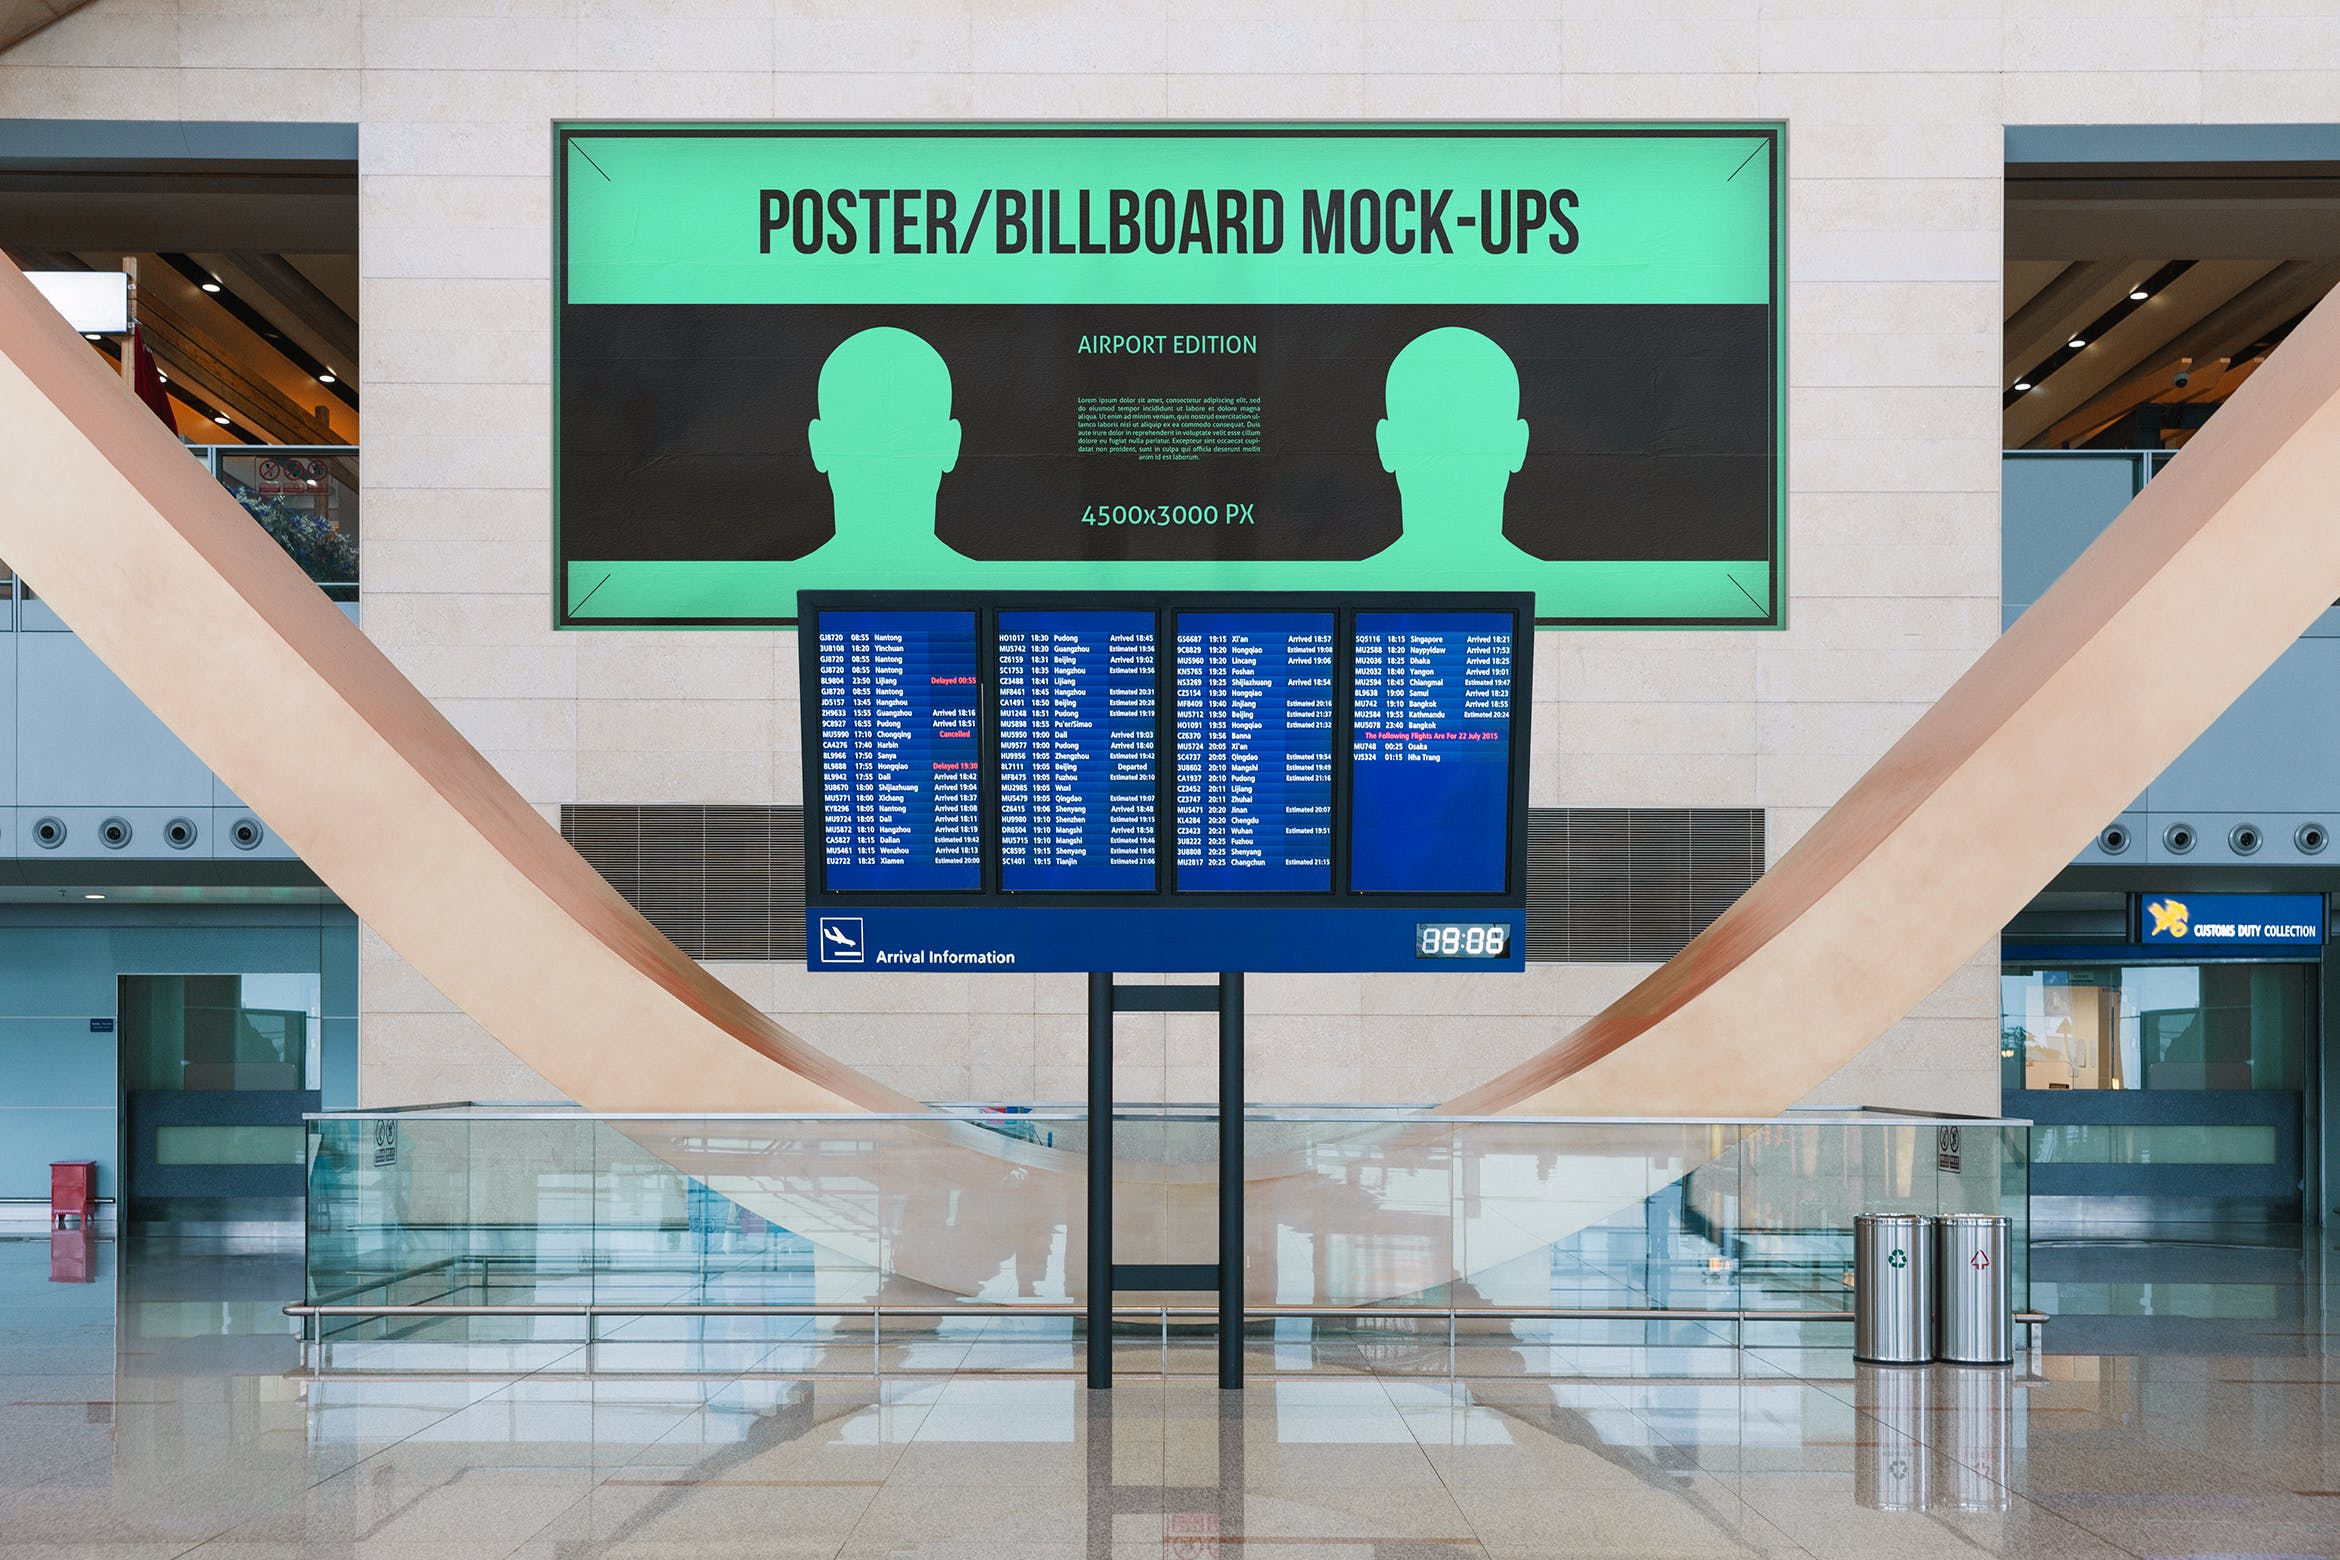 机场航班信息屏幕海报/广告牌样机素材库精选模板#7 Poster / Billboard Mock-ups – Airport Edition #7插图